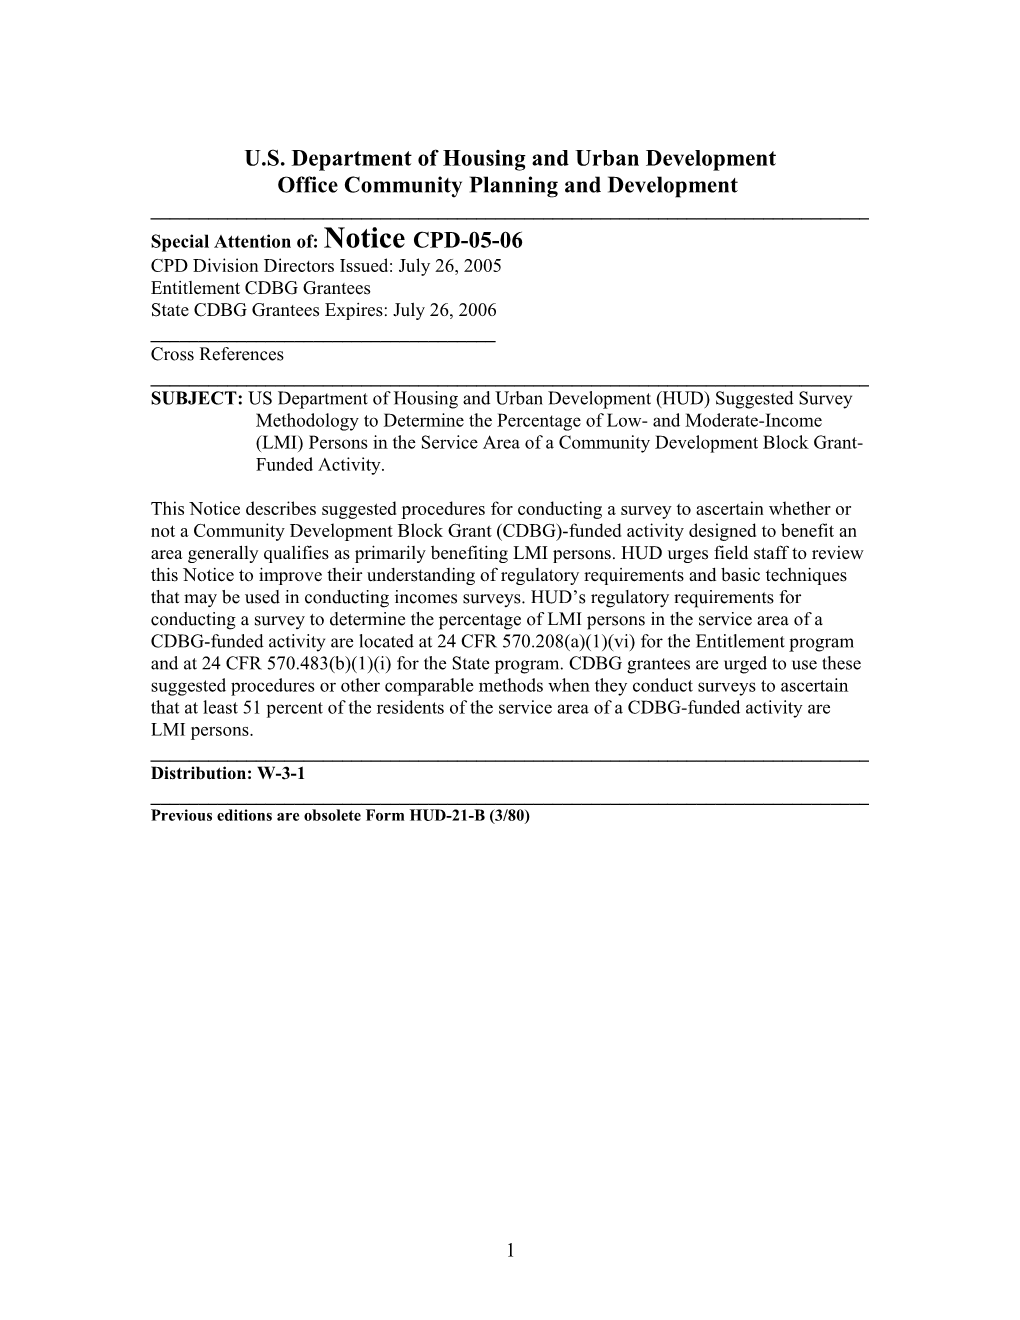 HUD Survey Methodology Guidelines CPD Notice 05-06